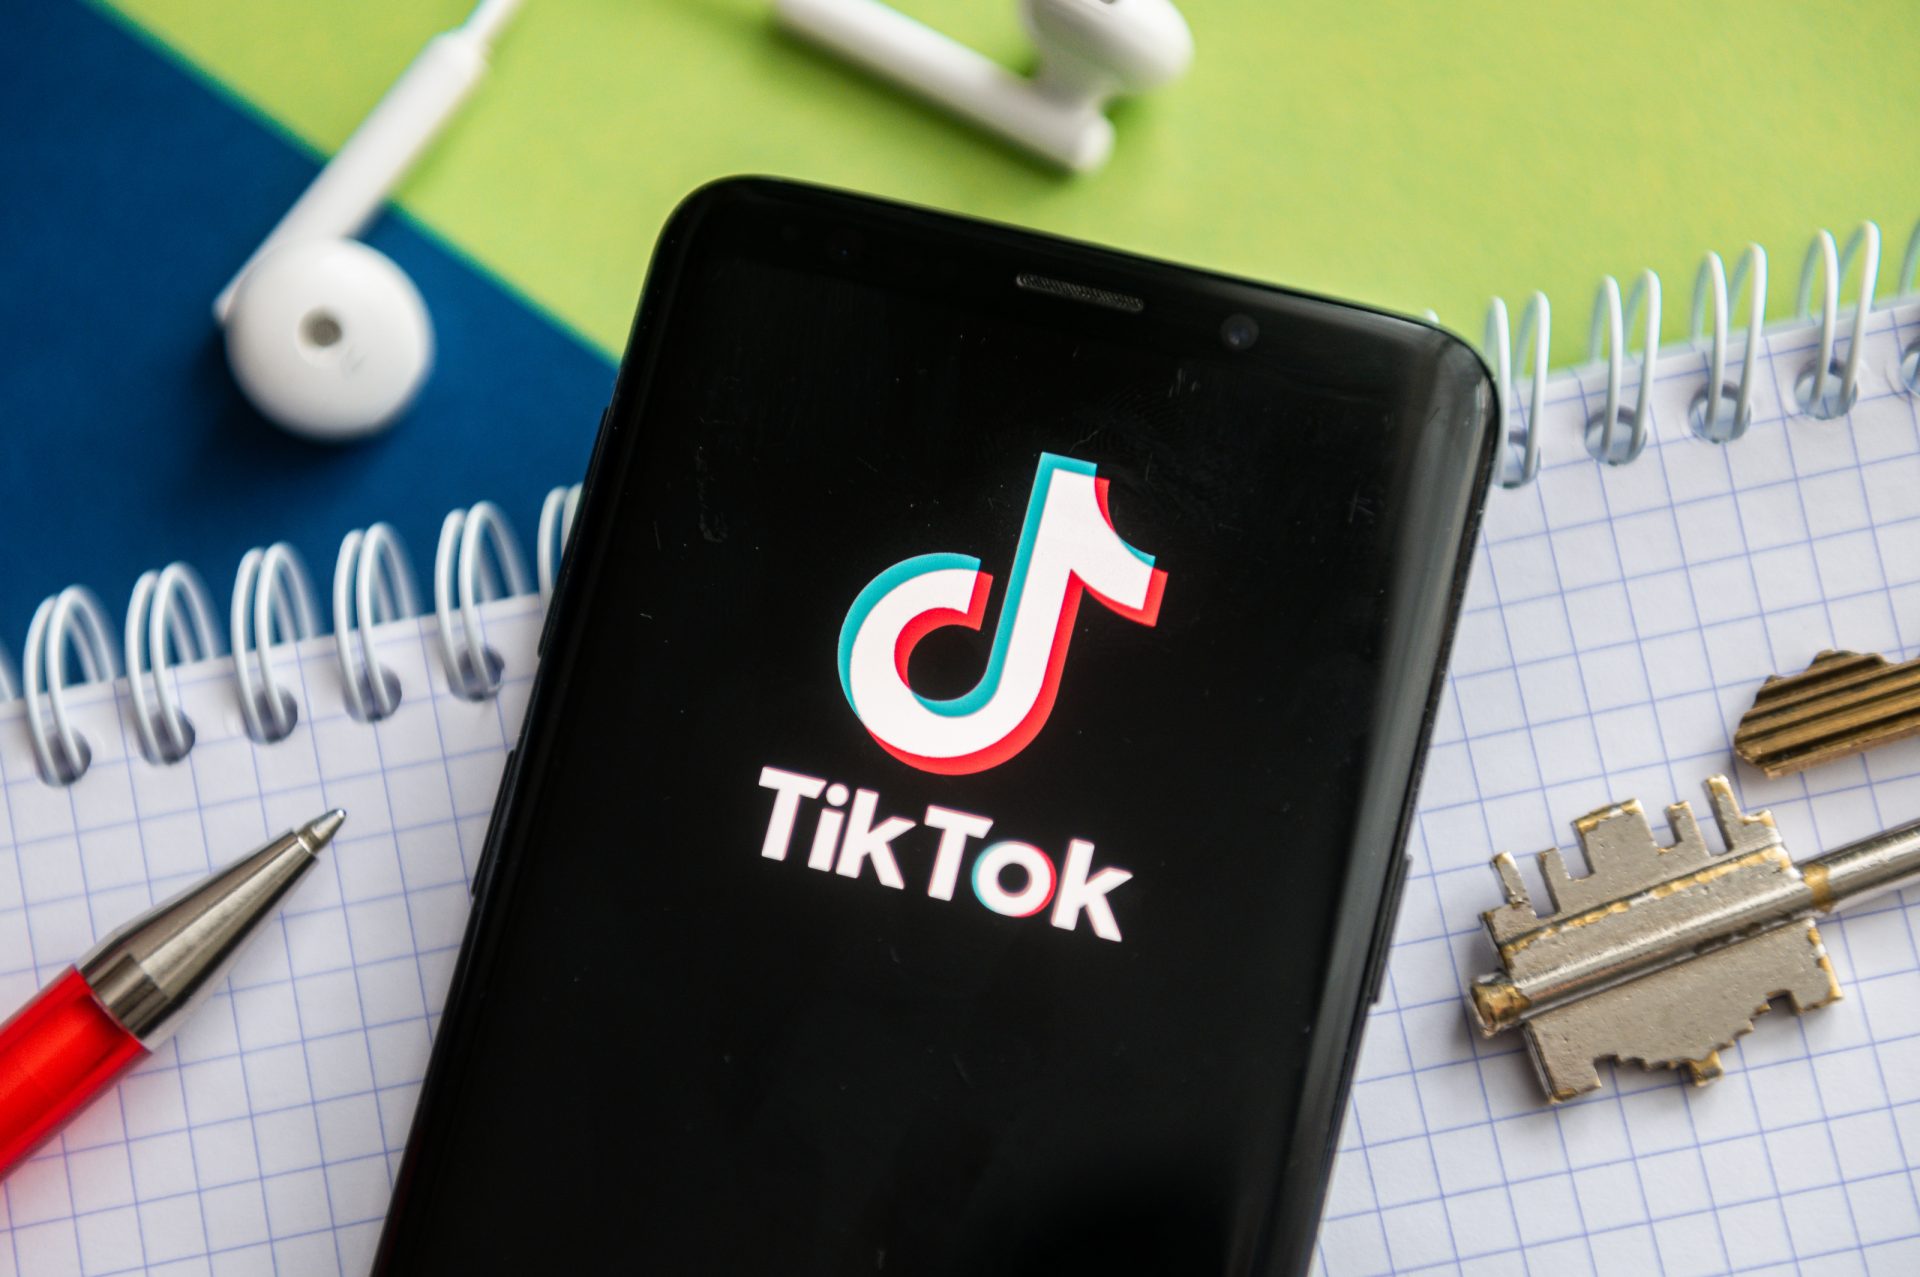 TikTok is reportedly testing a job recruitment tool